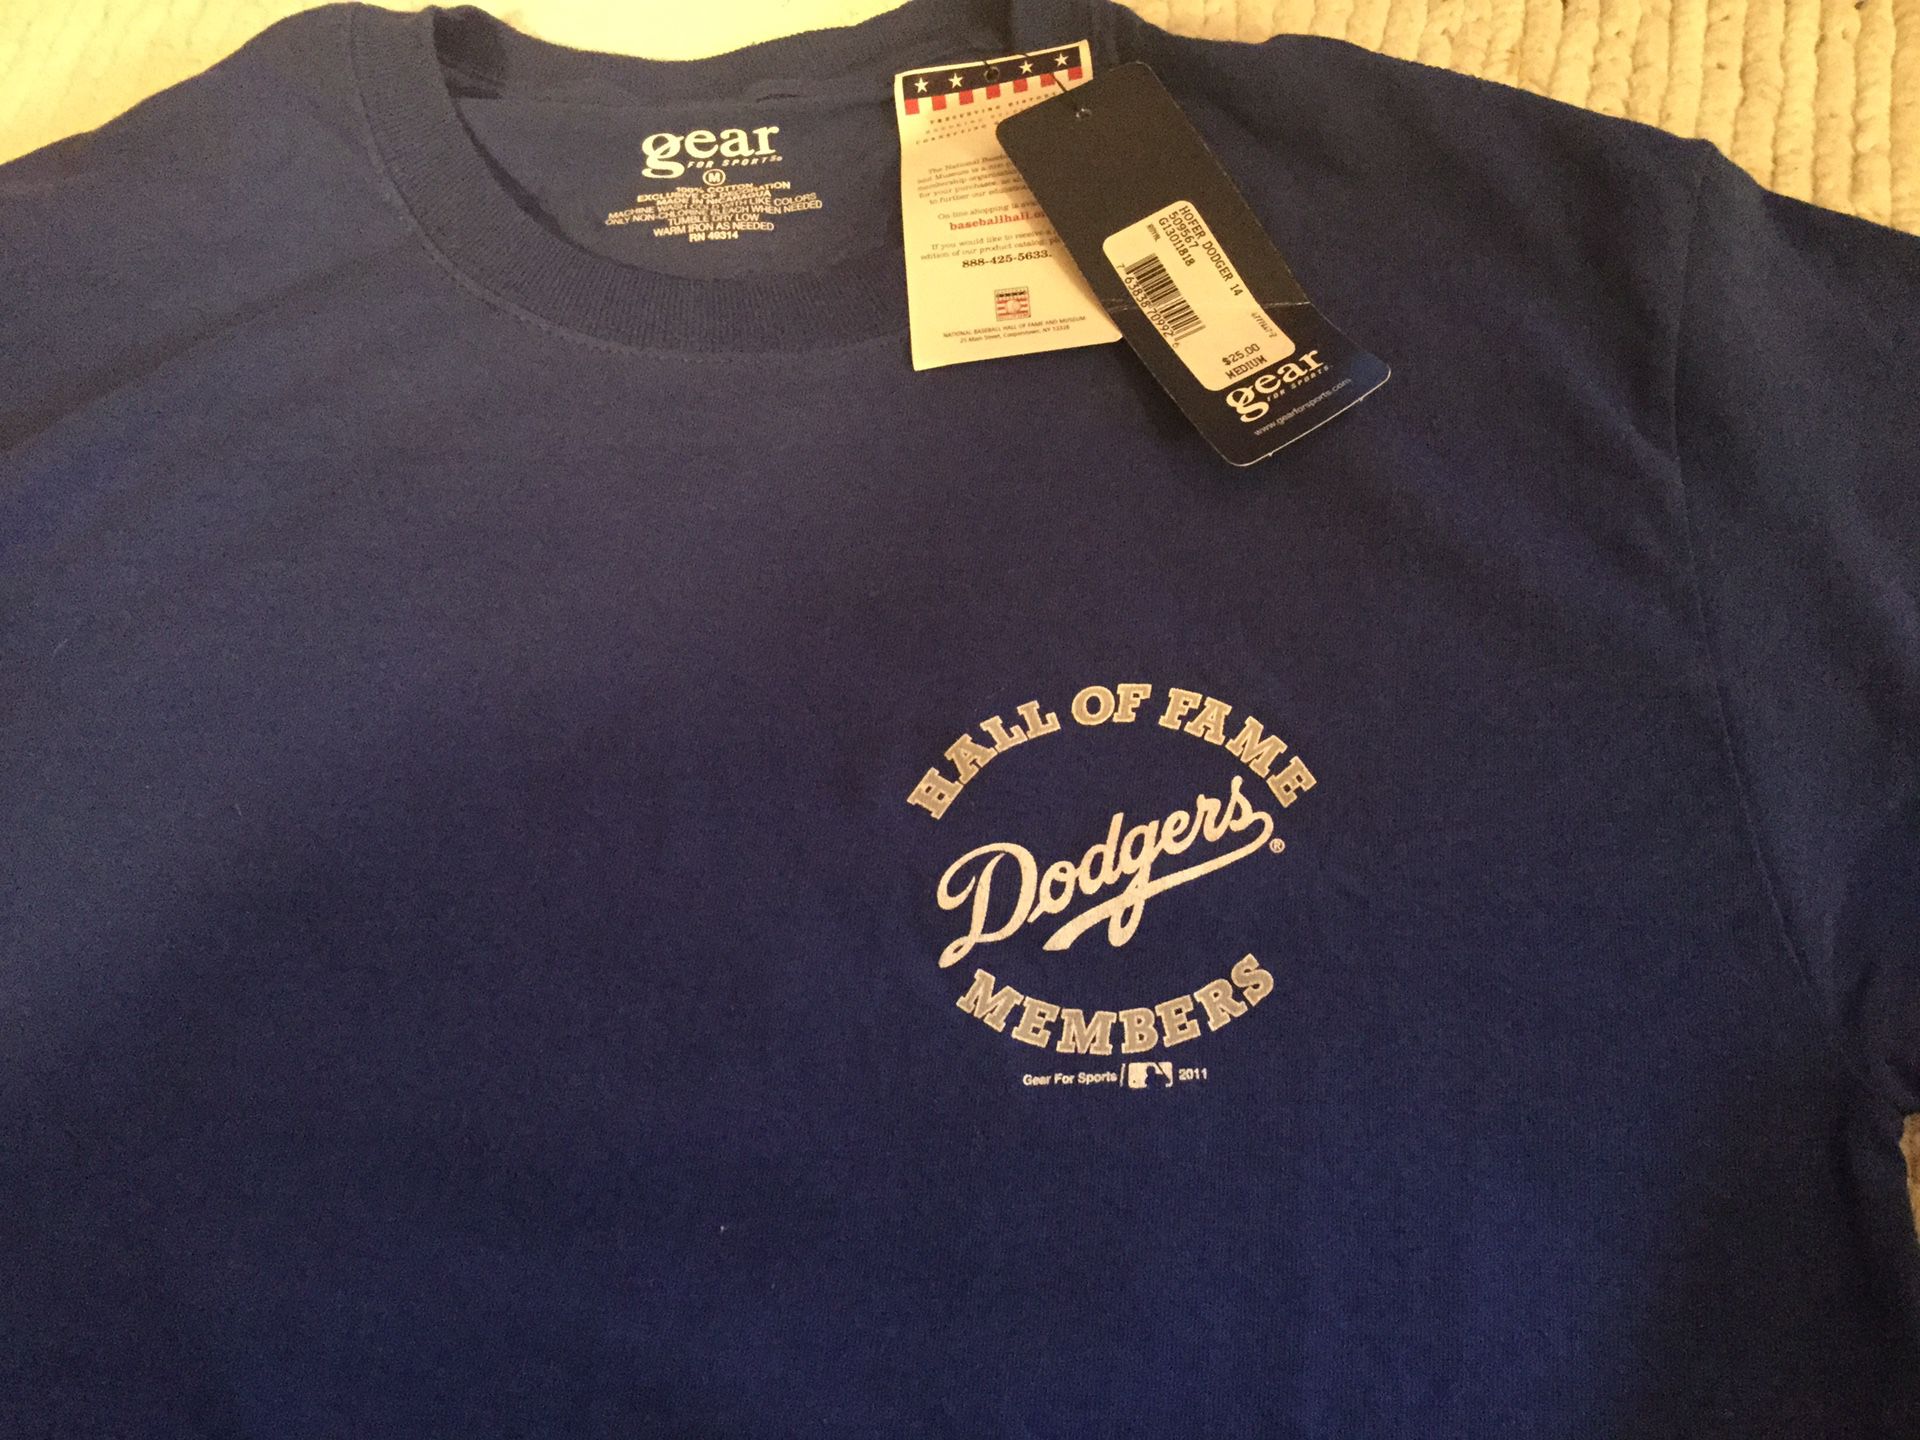 Dodgers Hall of Fame tee shirt